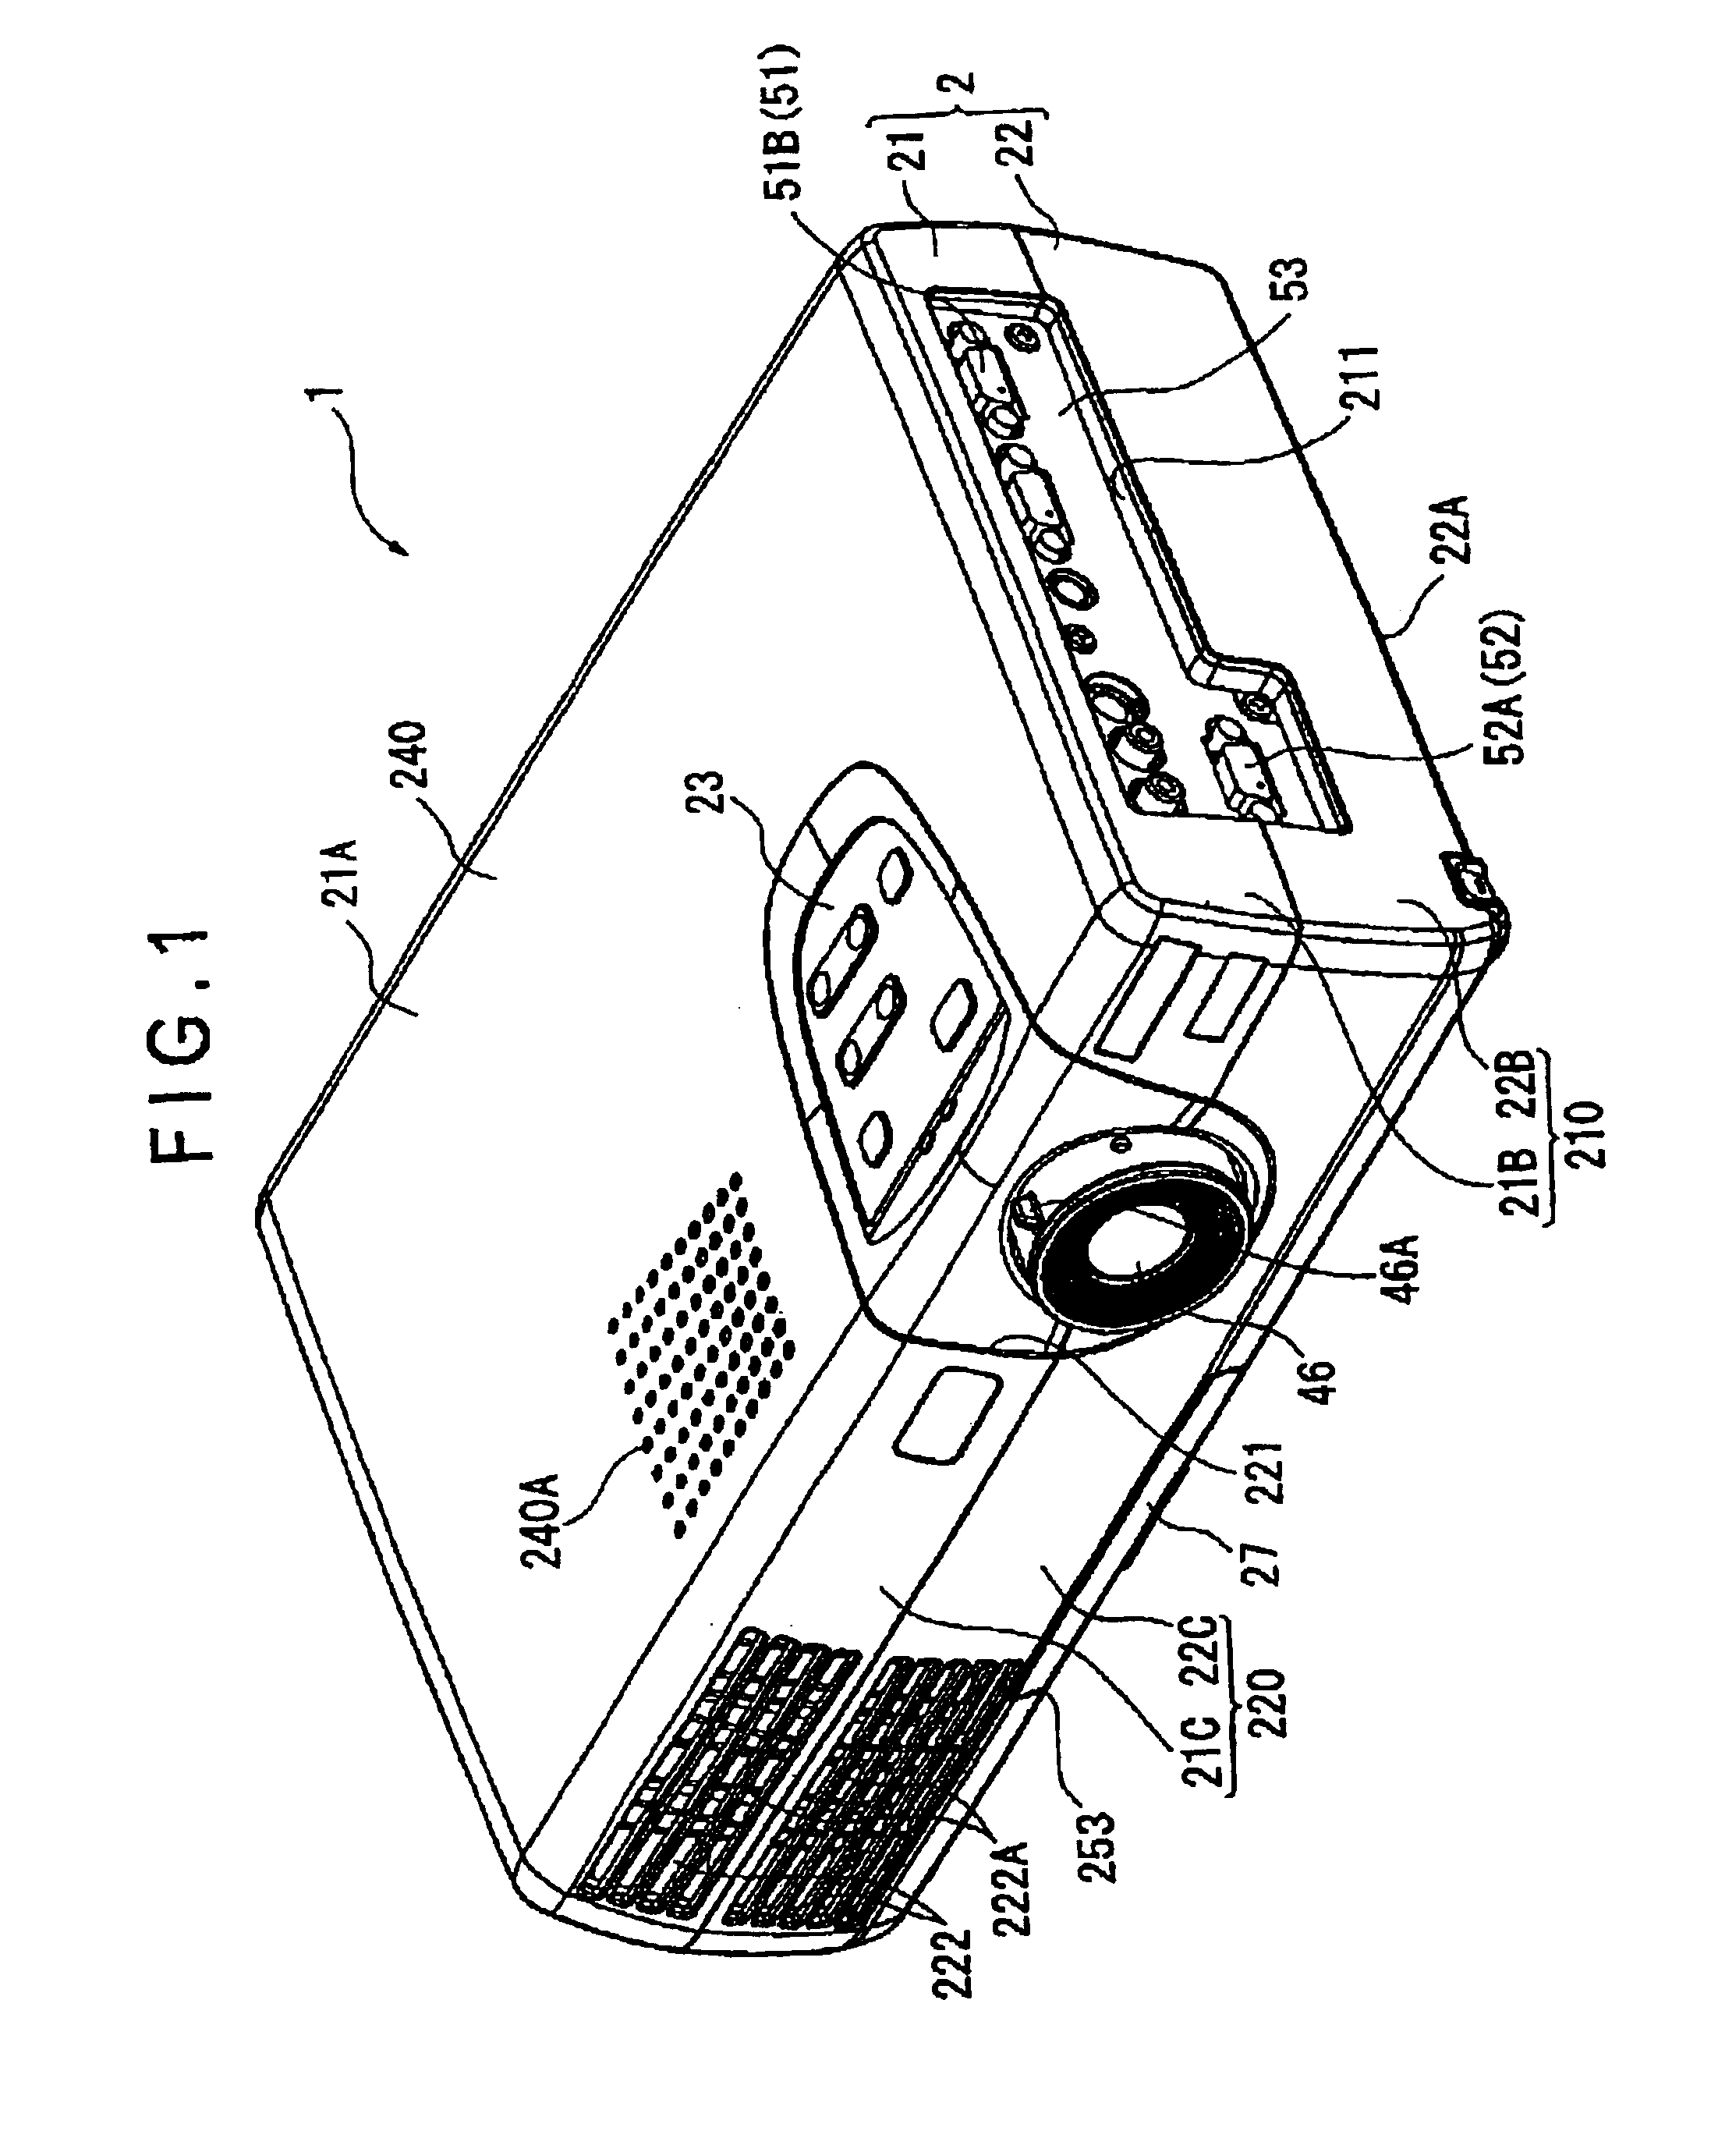 Polarization converter, an illumination optical device having the polarization converter and projector